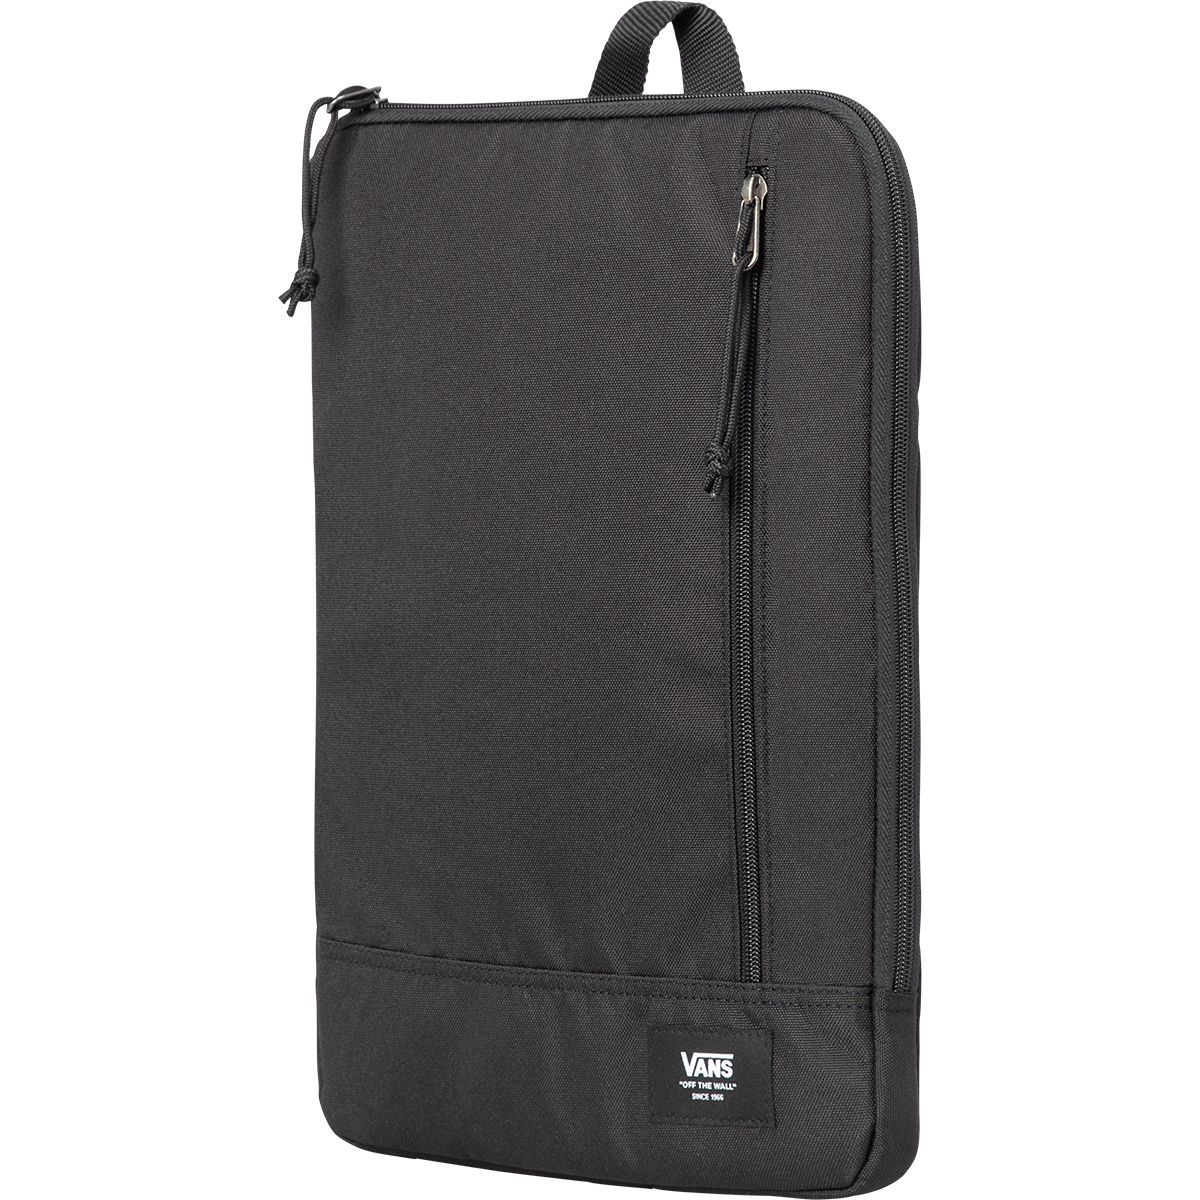 Vans Padded Laptop Sleeve Bag  Lightweight